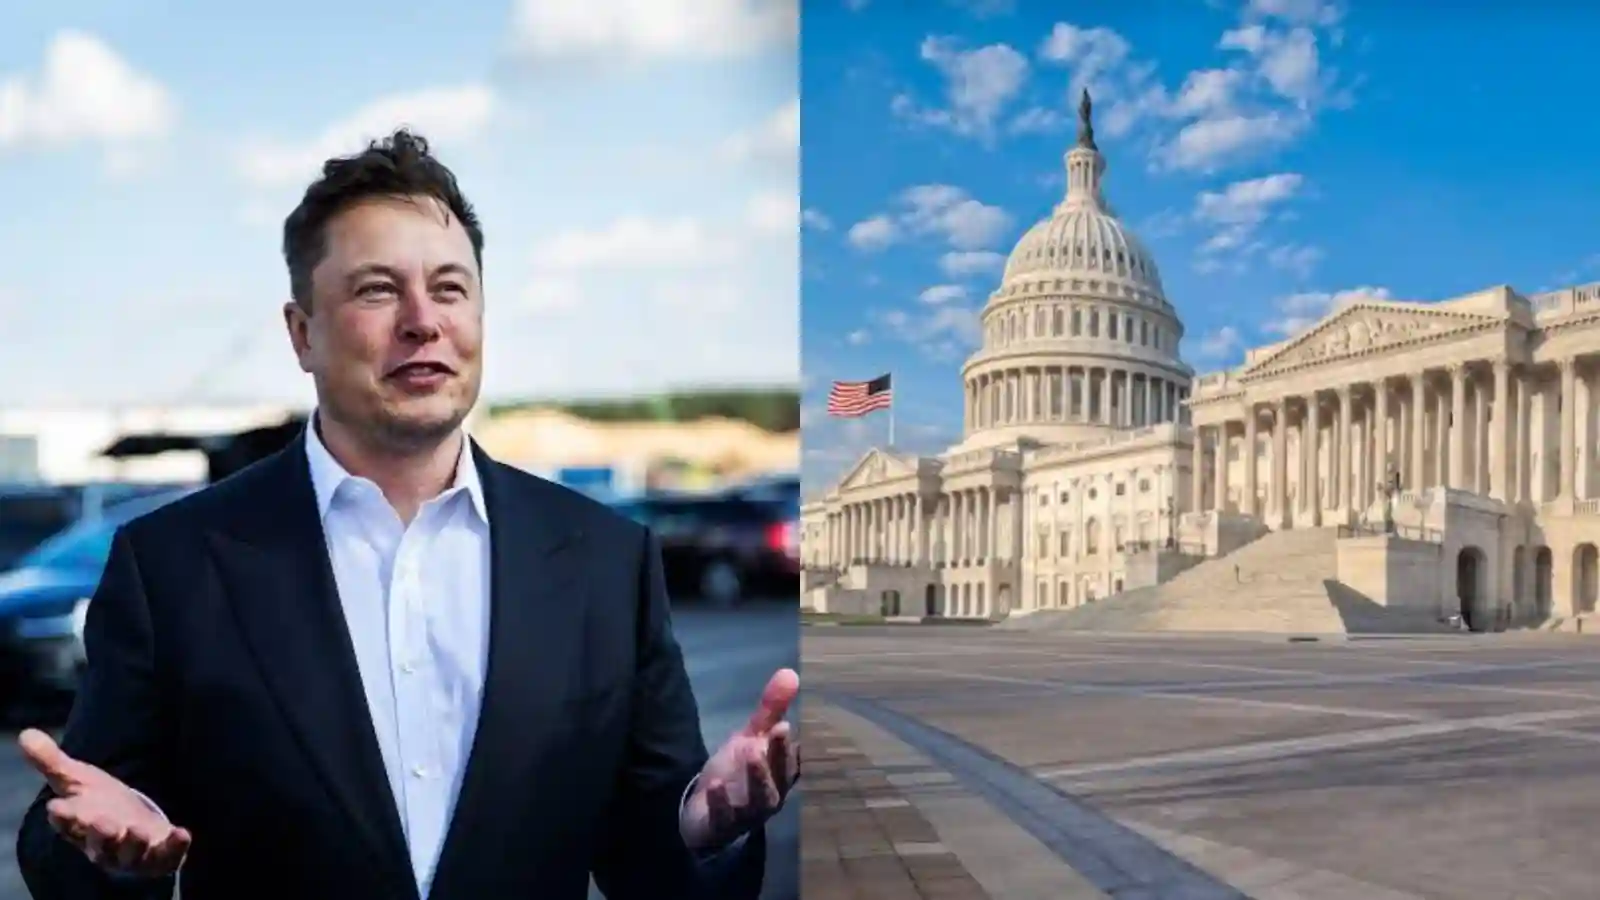 Elon Musk asks Twitter about the $1.7 trillion omnibus bill